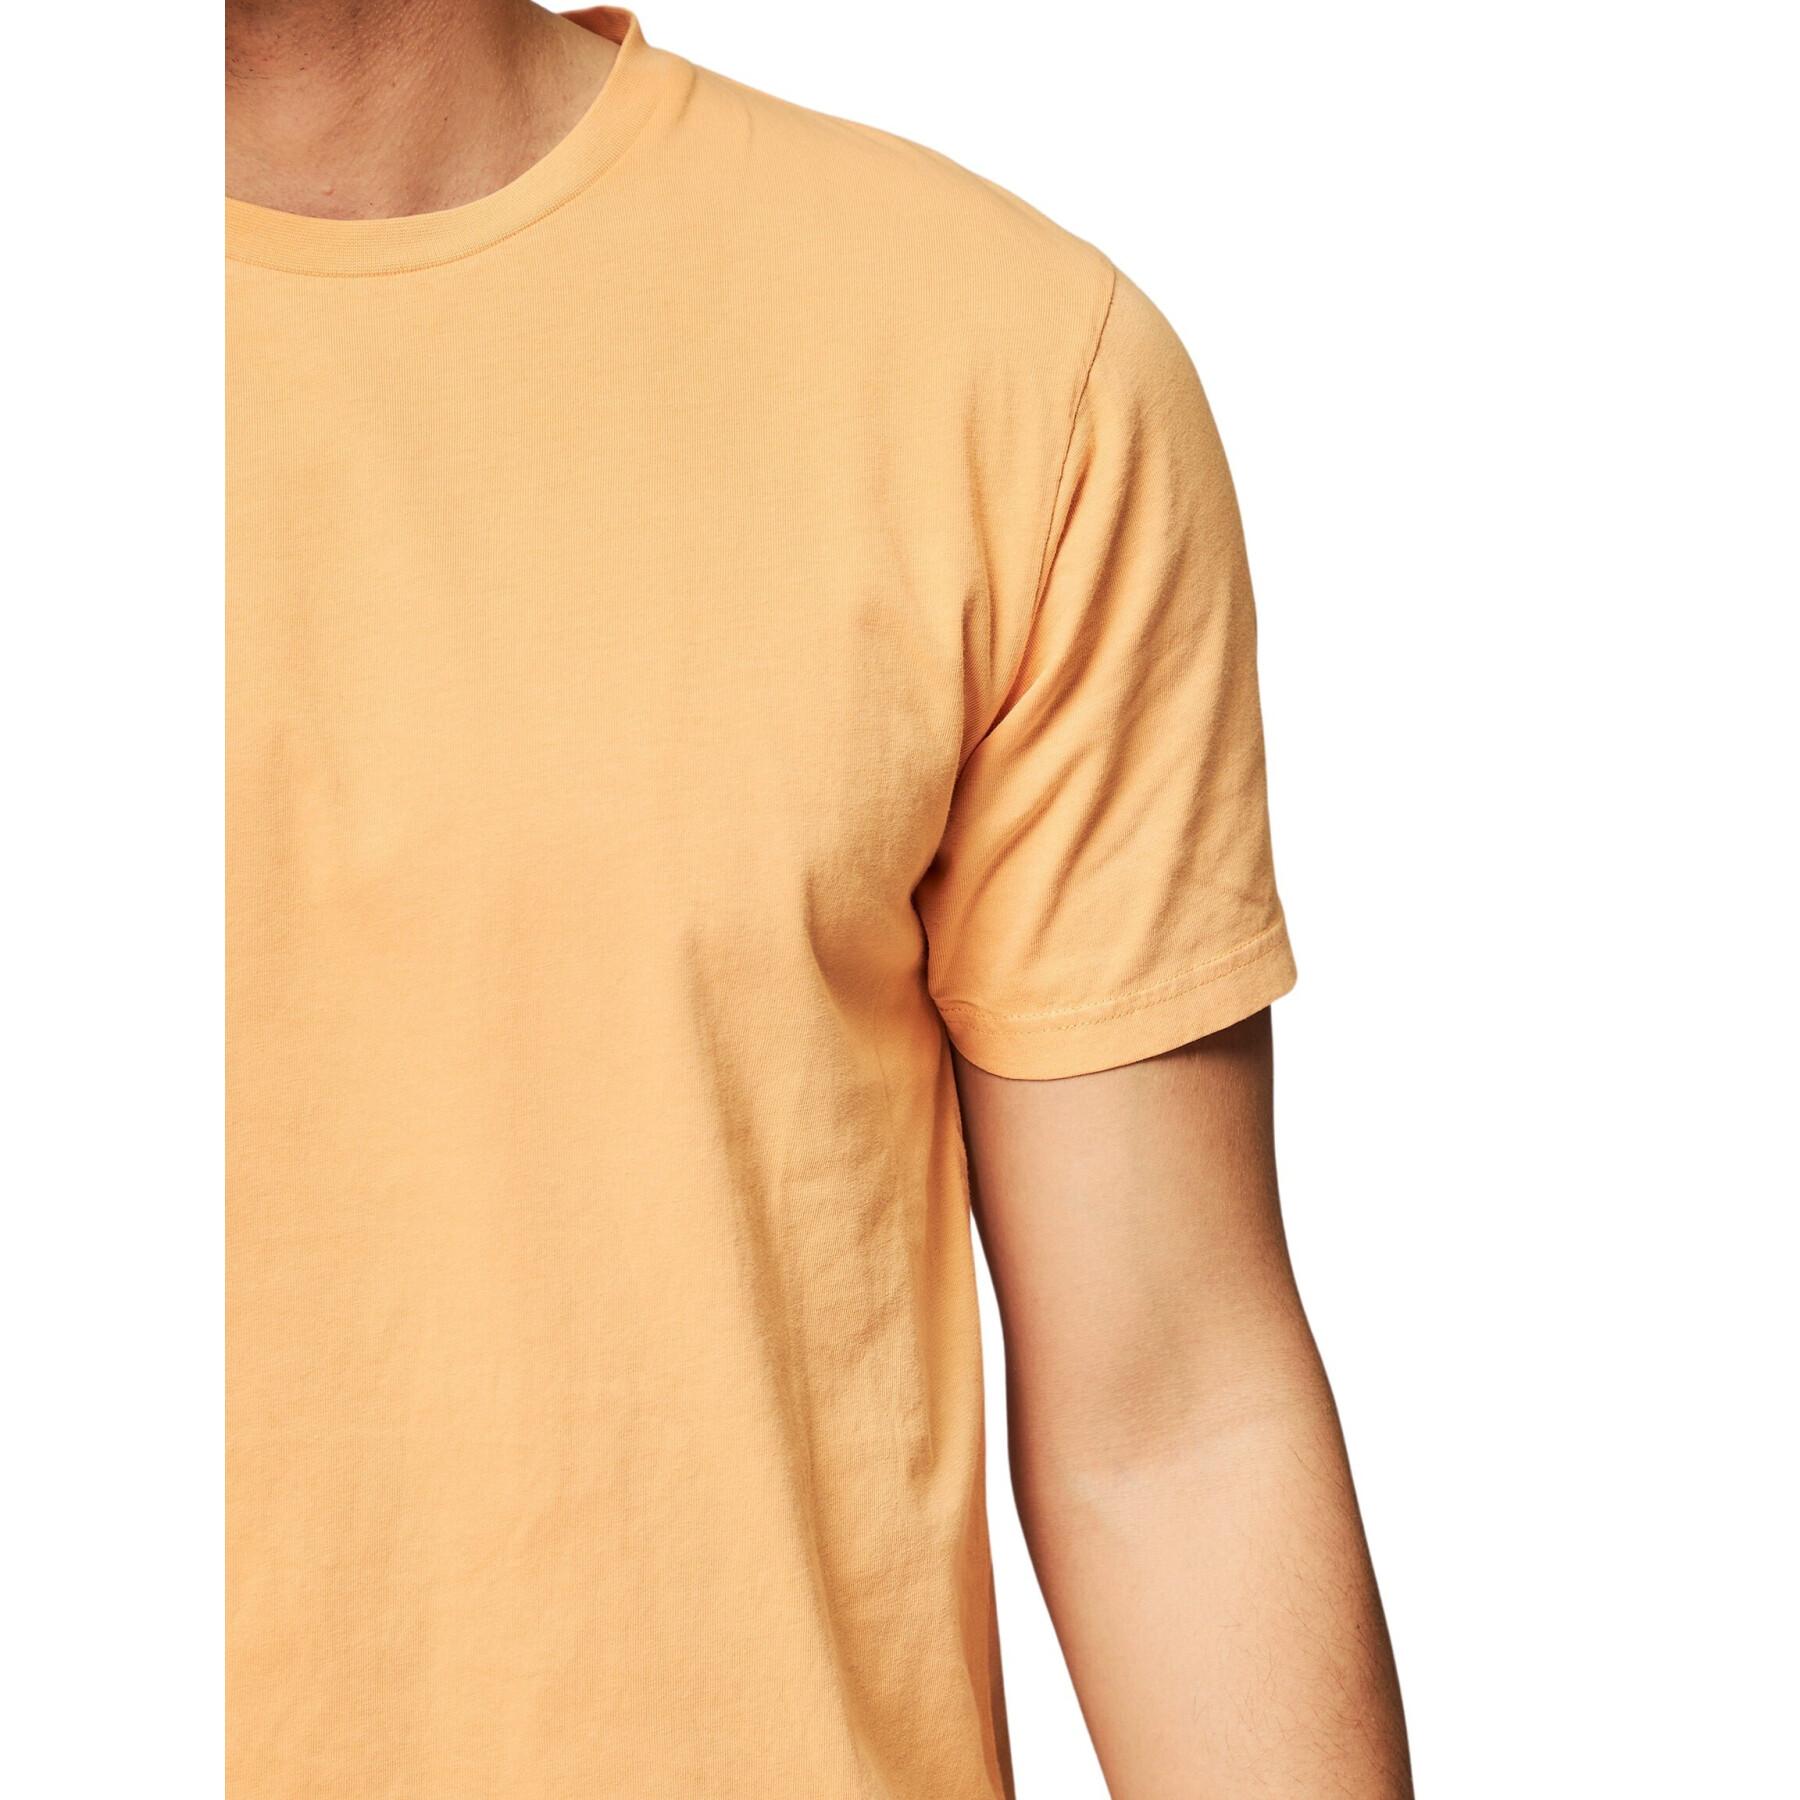 Koszulka Colorful Standard Classic Organic sandstone orange